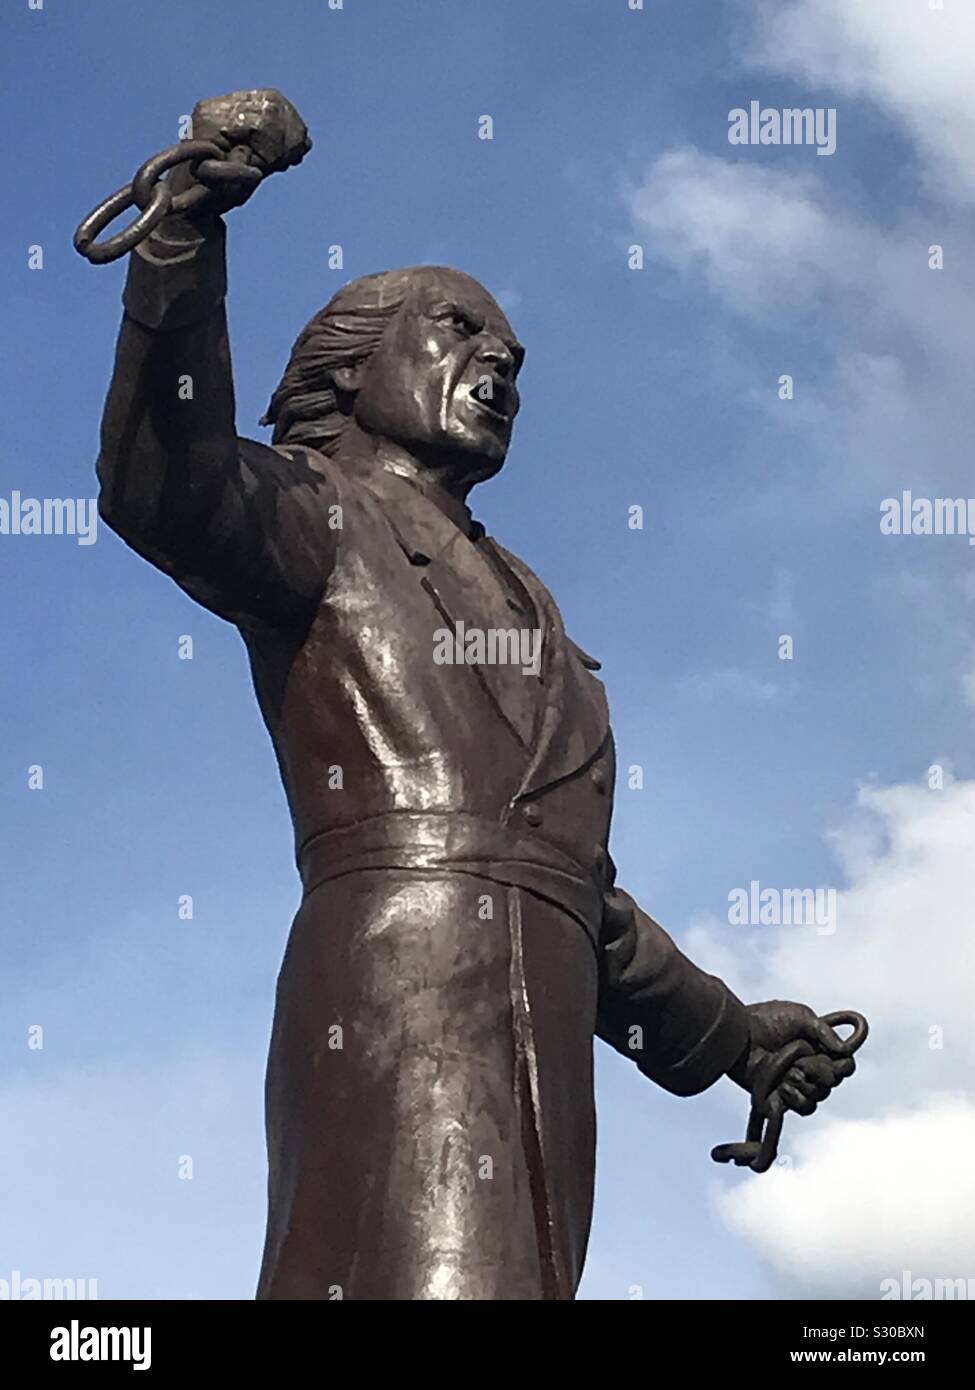 A statue of Miguel Hidalgo, father of the Mexican nation, on the Plaza de la Liberación in Guadalajara, Mexico. Stock Photo